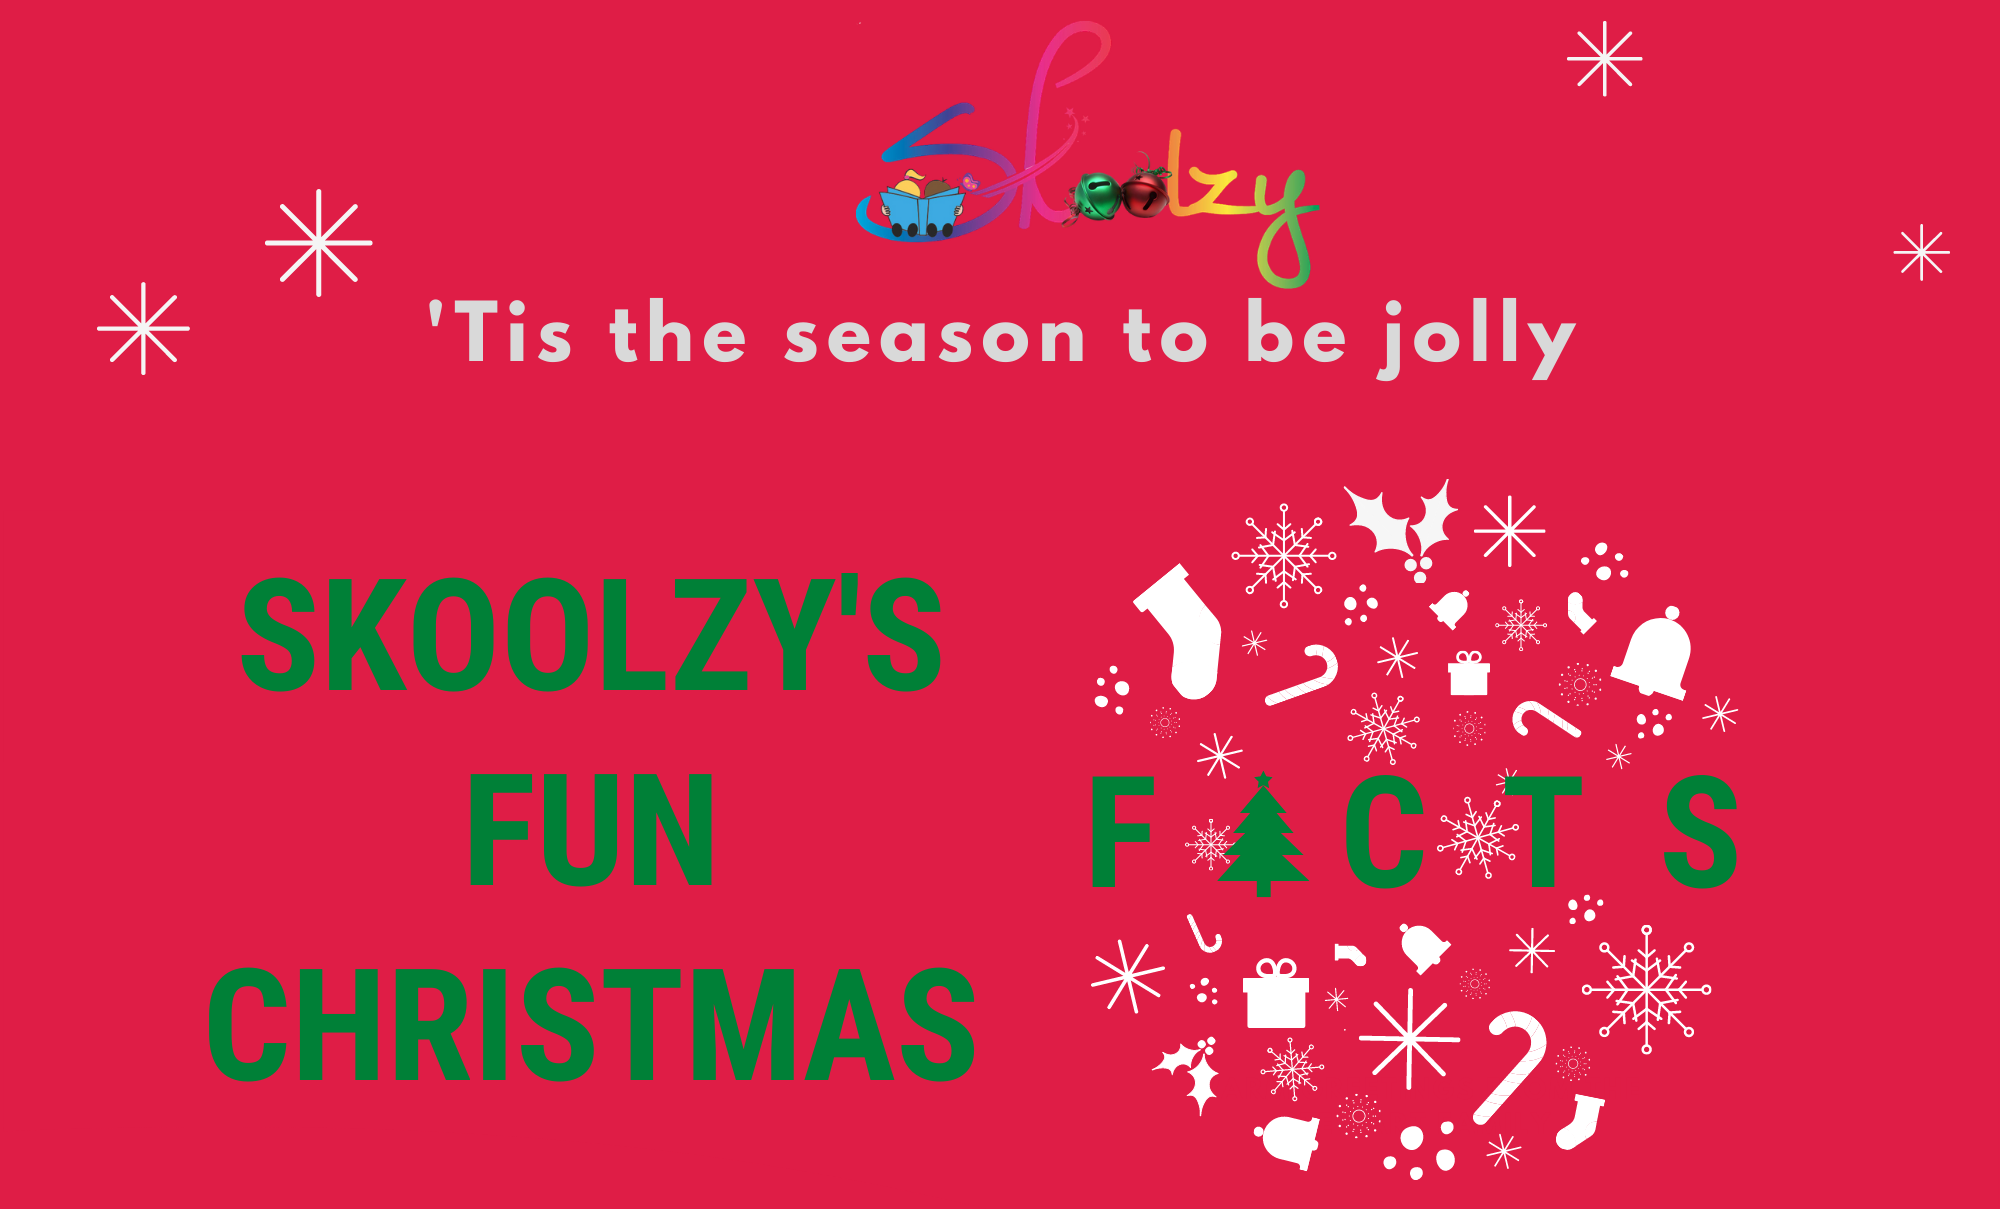 Fun Christmas Facts